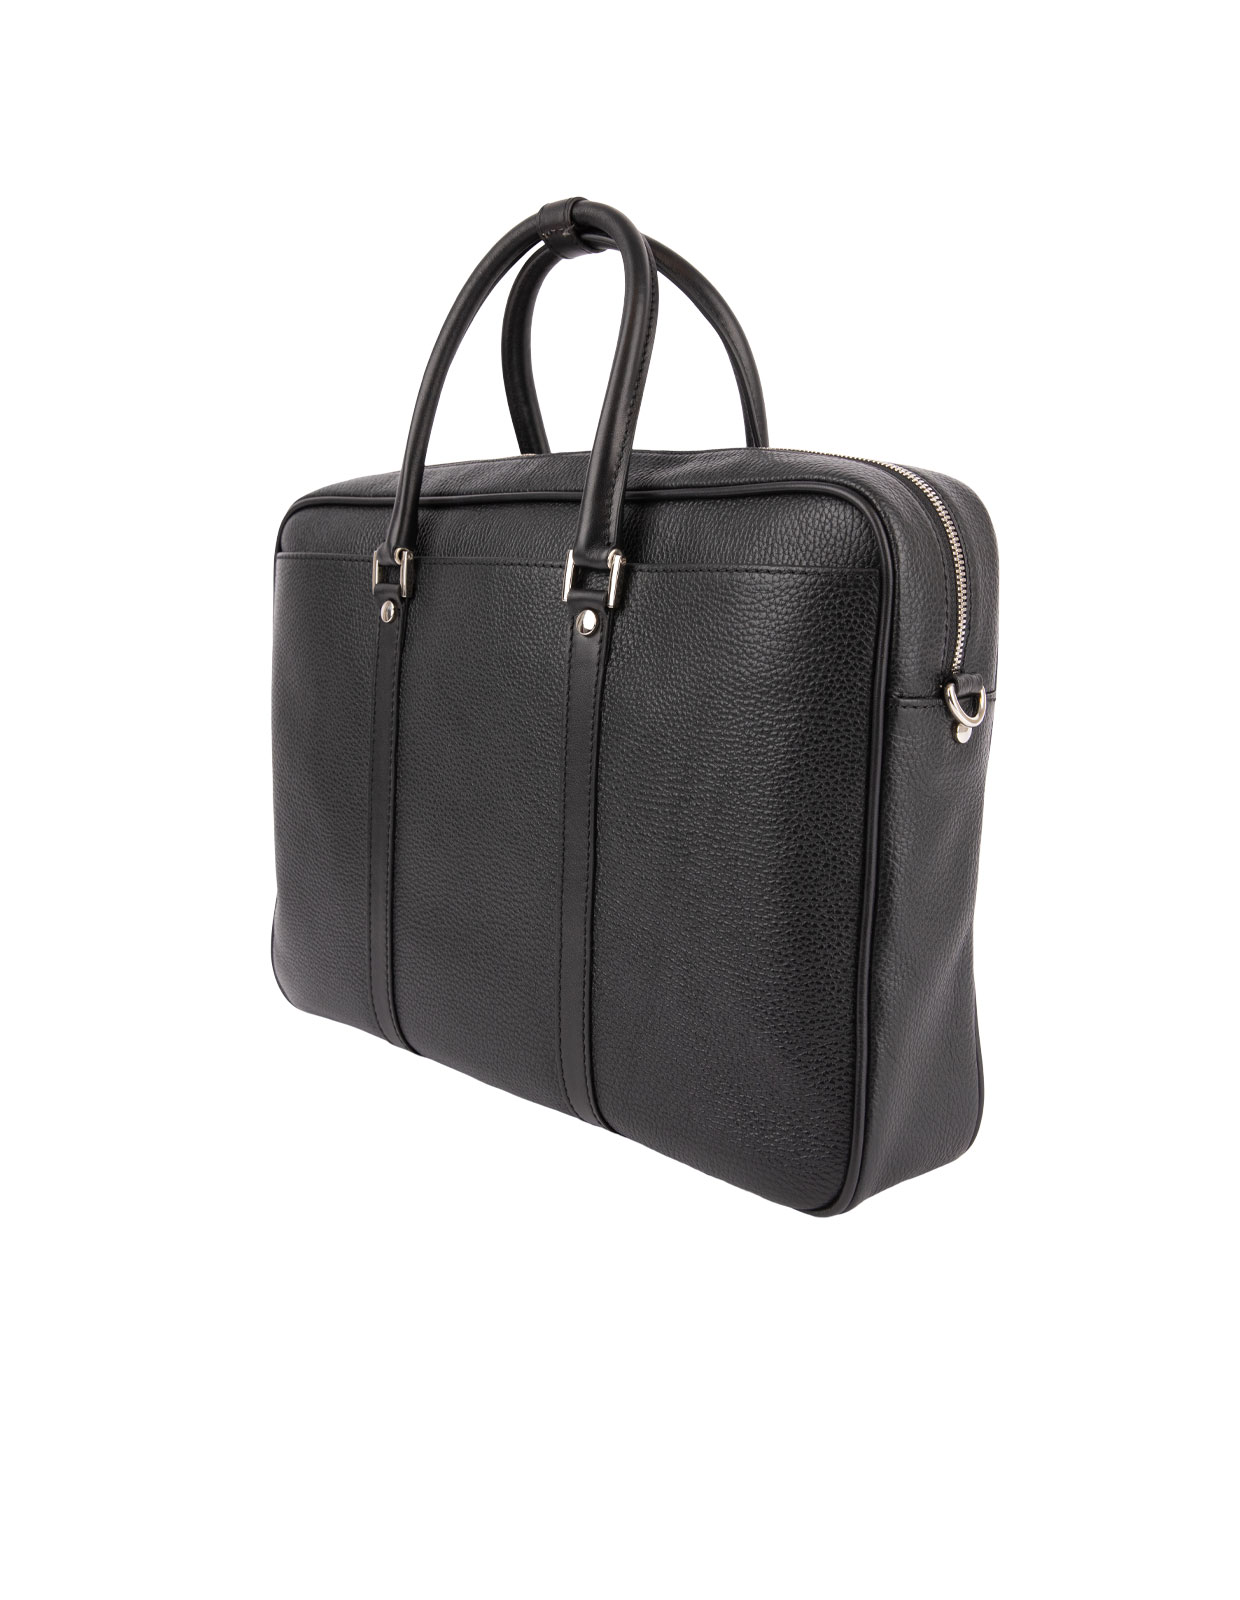 Briefcase Bottalato Leather Black